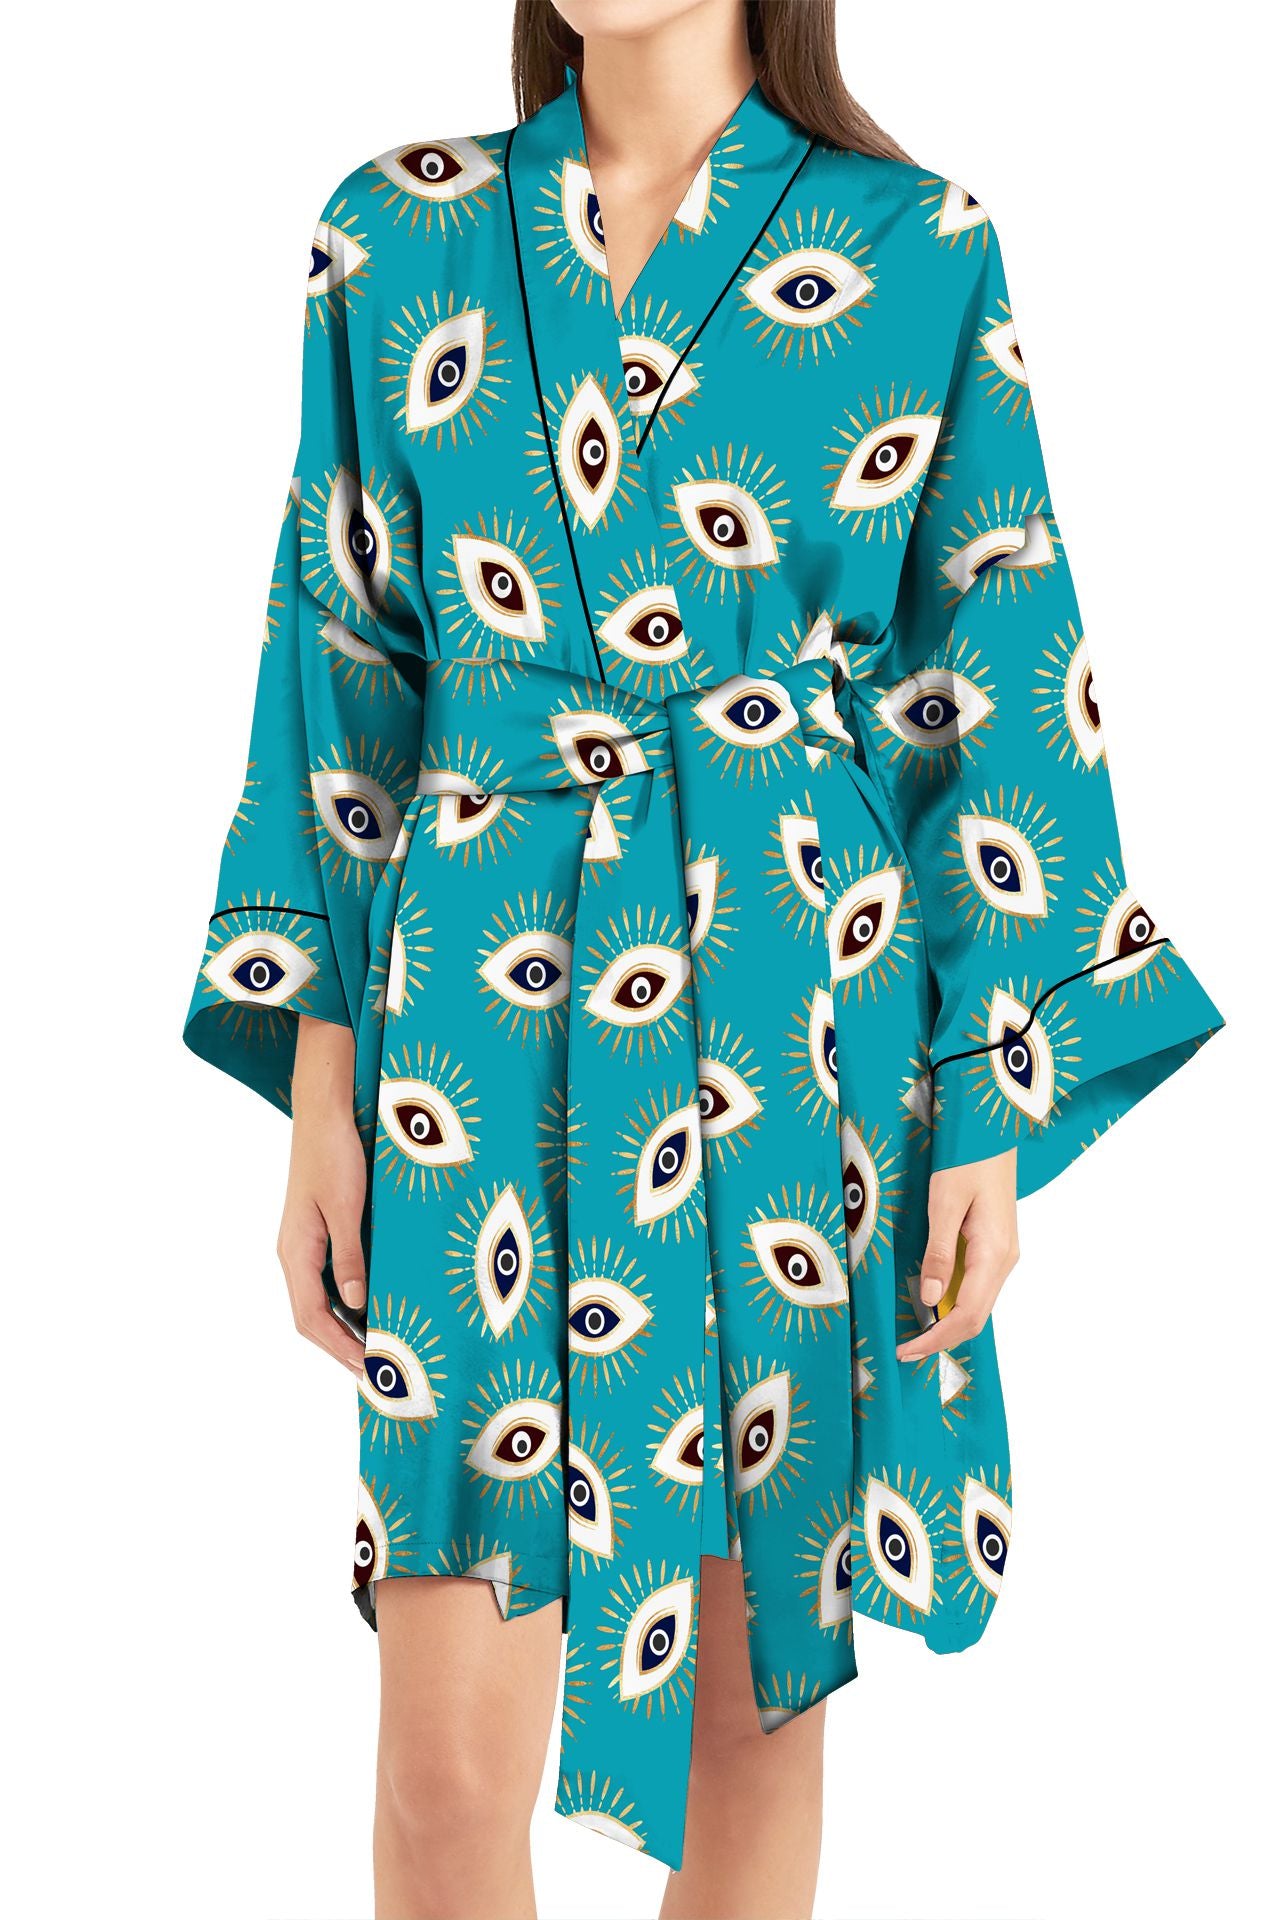 "Kyle X Shahida" "short silk robe womens" "printed silk robe" "kimono short dresses"